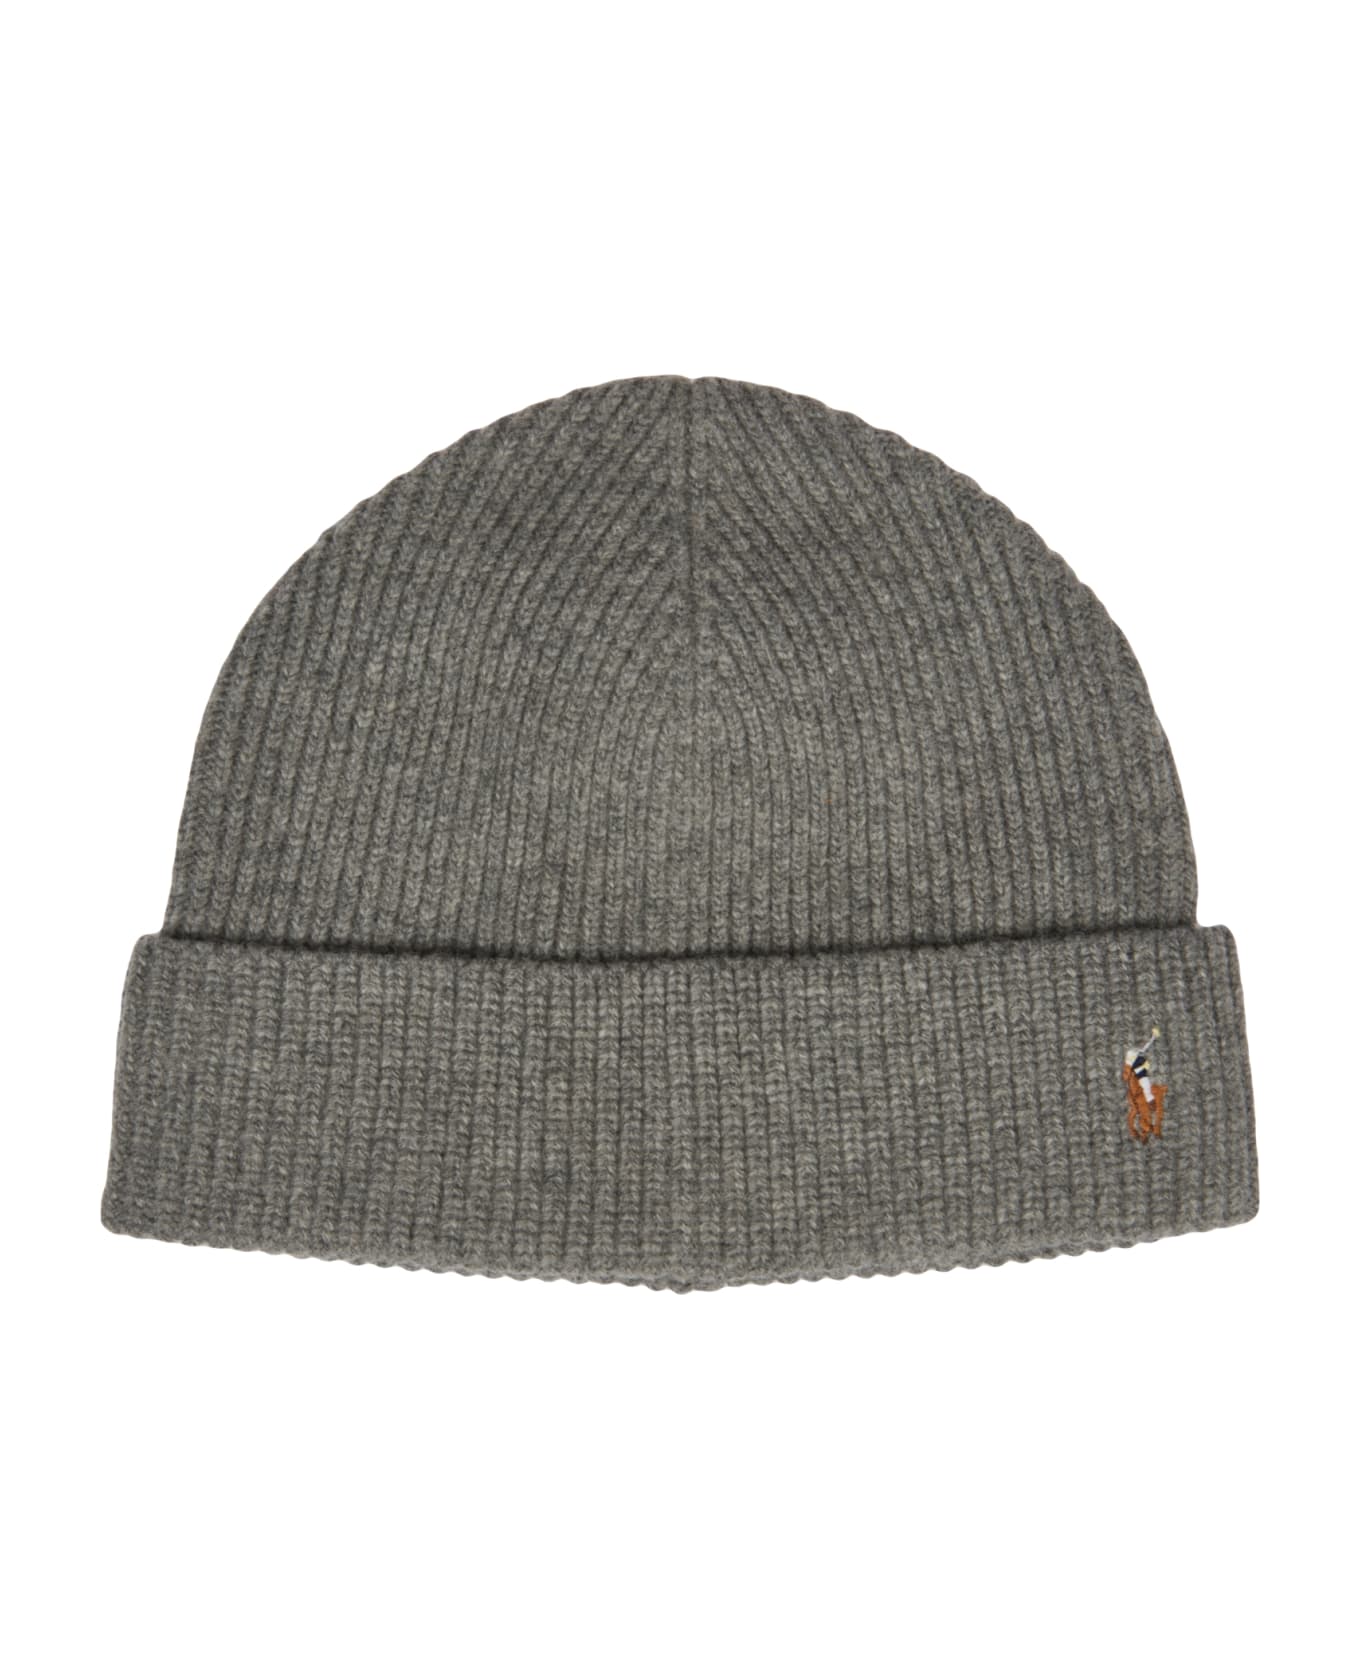 Polo Ralph Lauren Cuff Hat - Grey